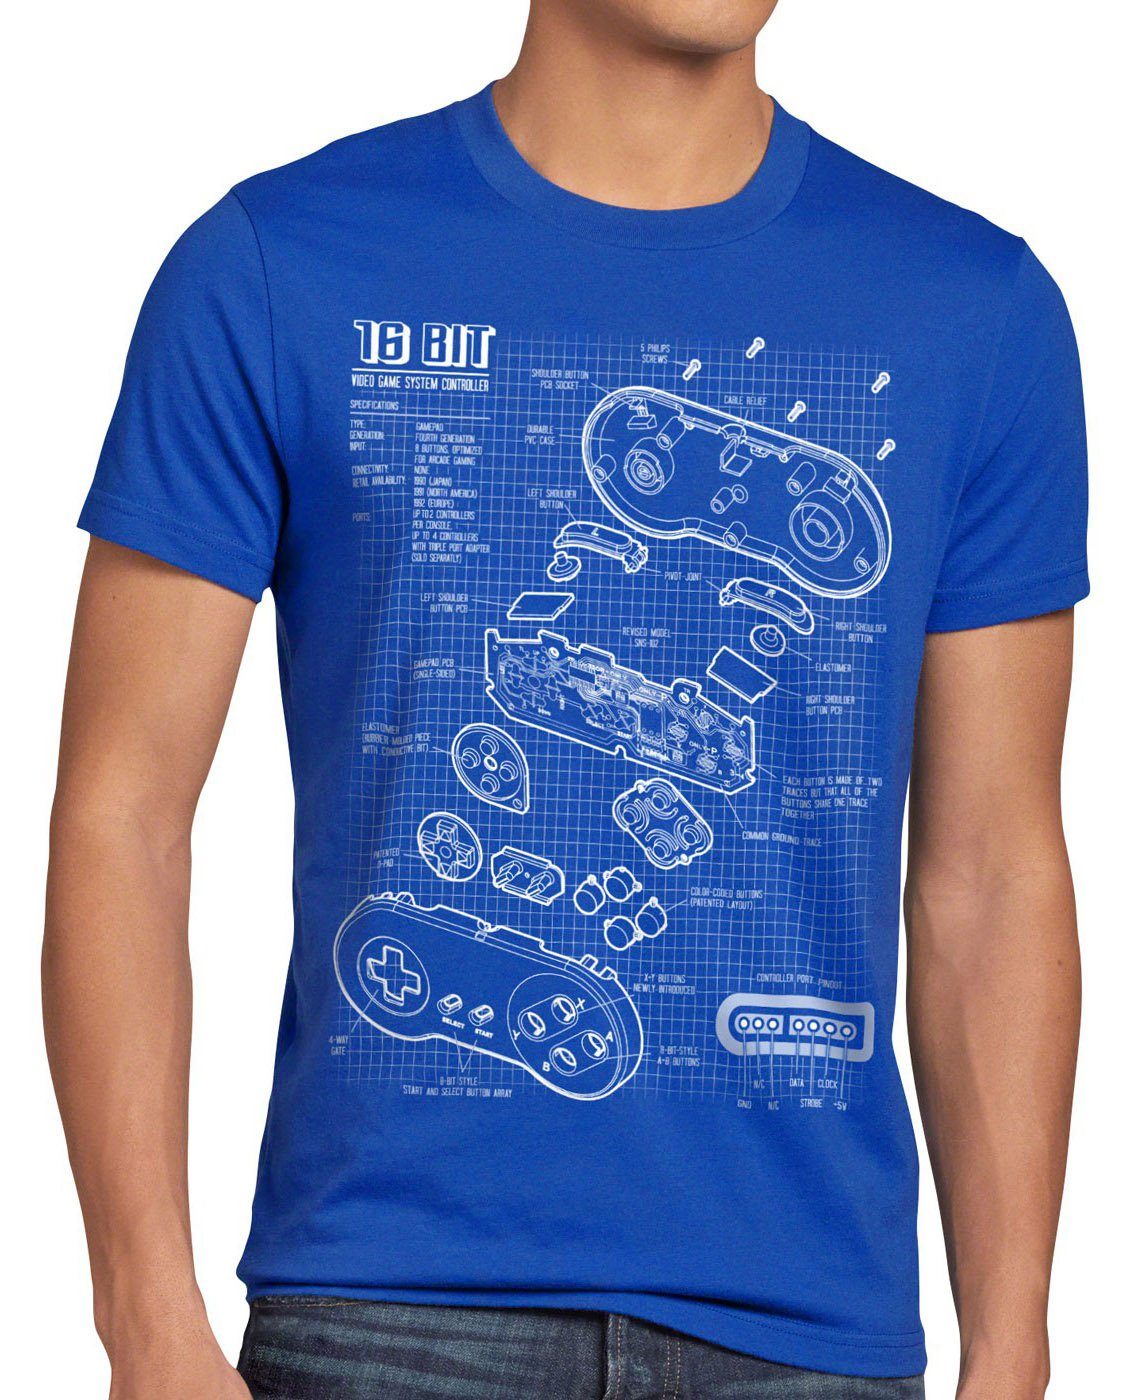 mario nes classic switch famicom Print-Shirt blau 16-Bit nintendo style3 super Herren snes T-Shirt Gamer